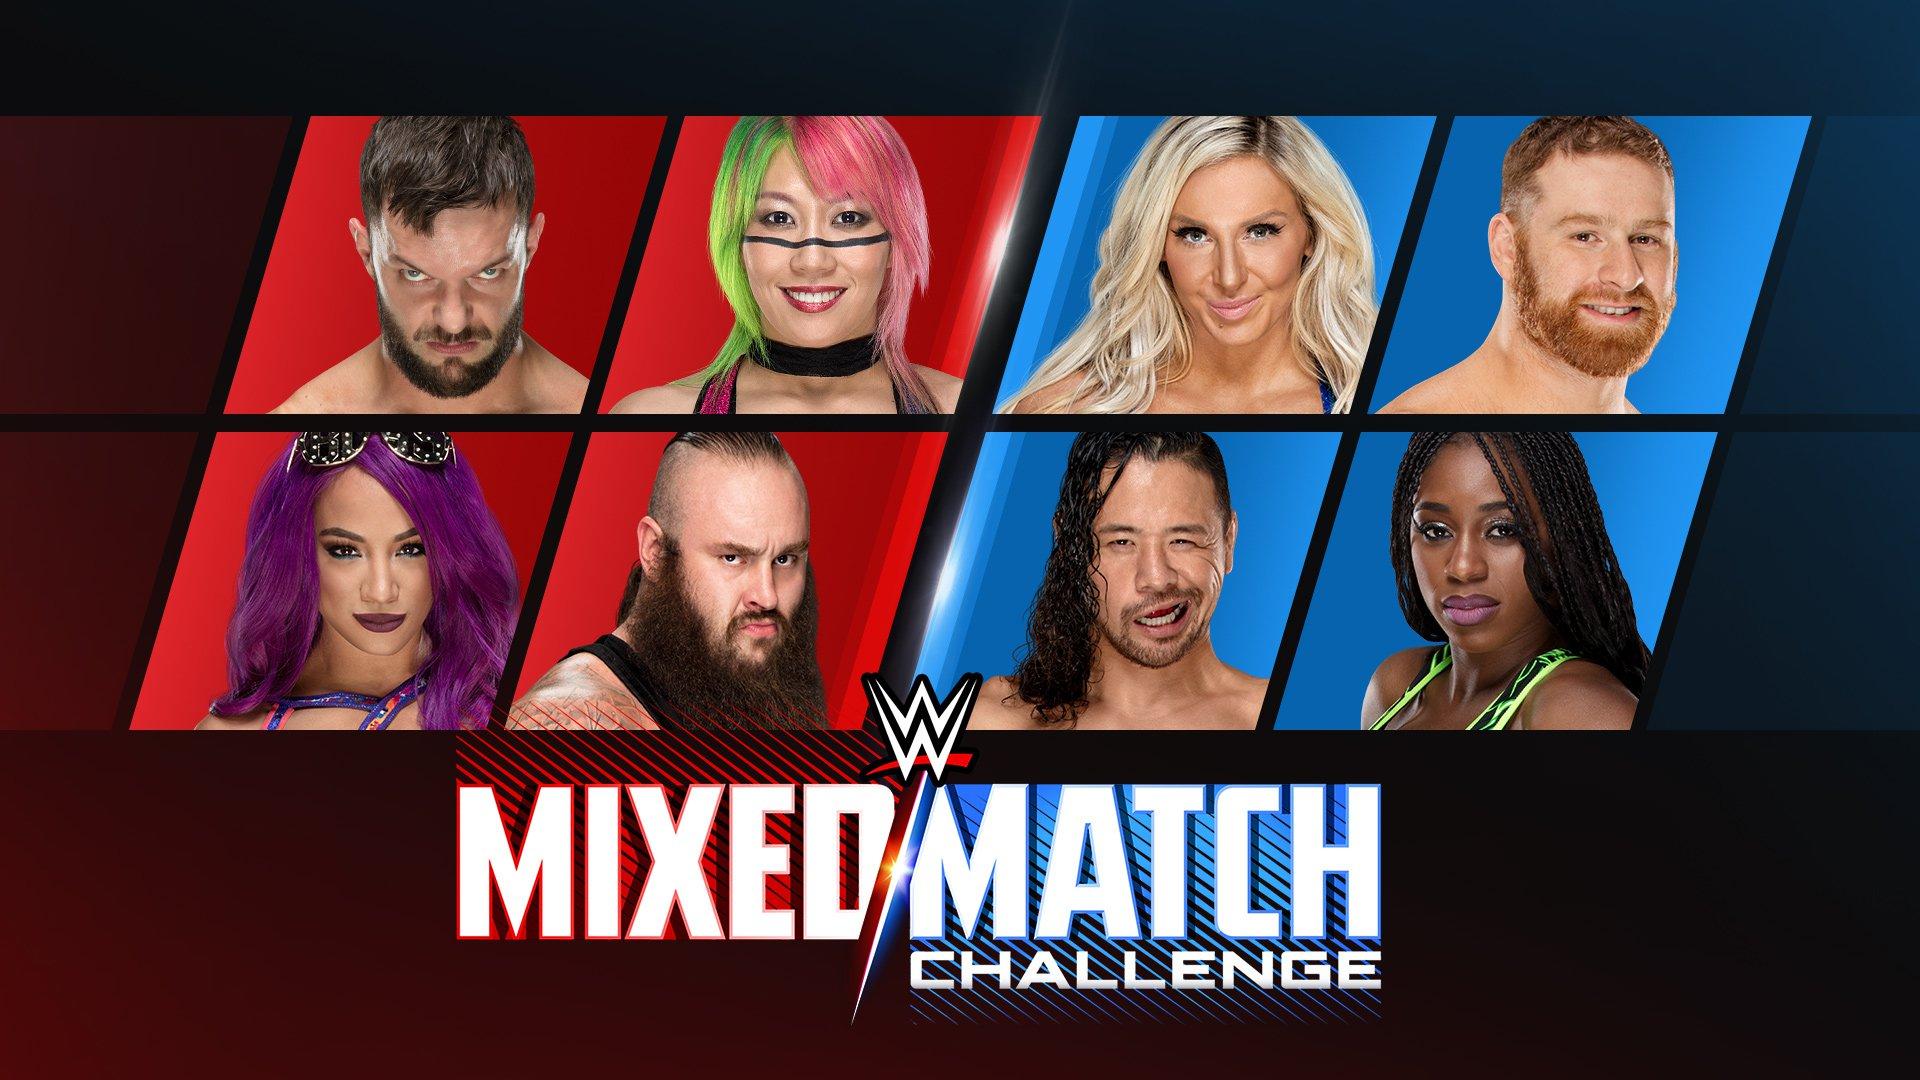 Beth Phoenix, WWE Mixed Match Challenge için yorumcu olacak